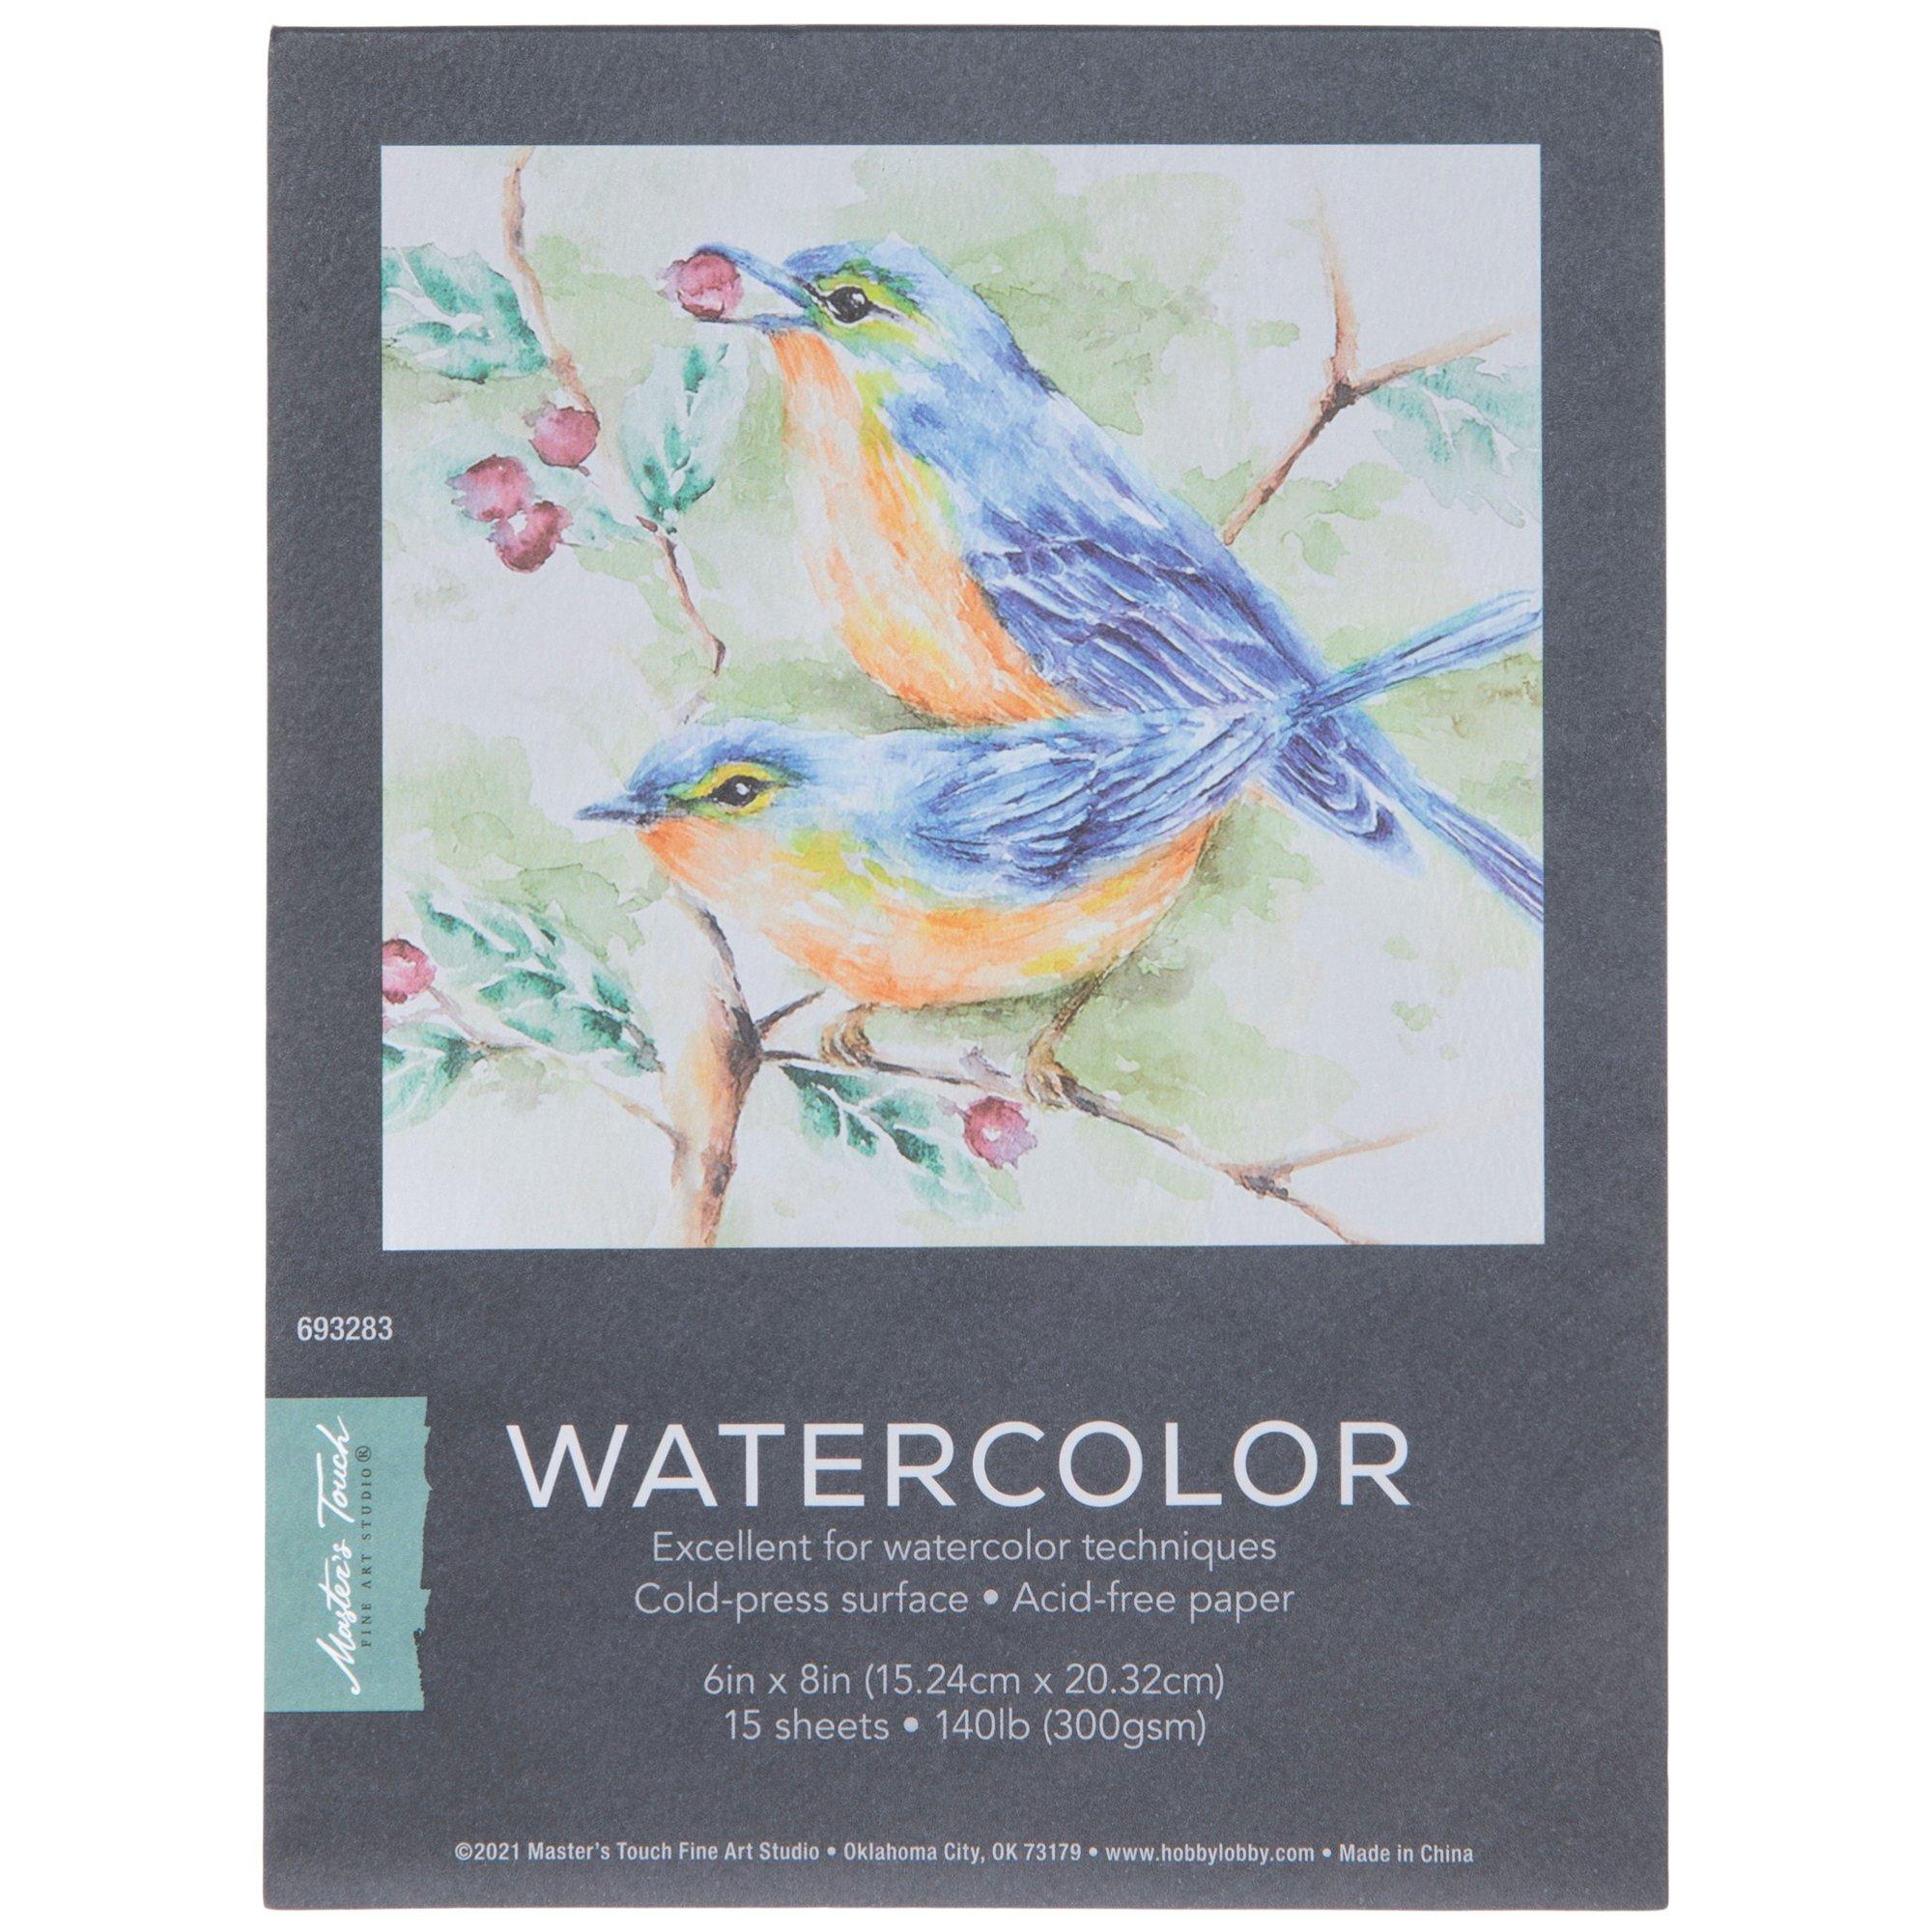 XL Watercolor Pad 11x15